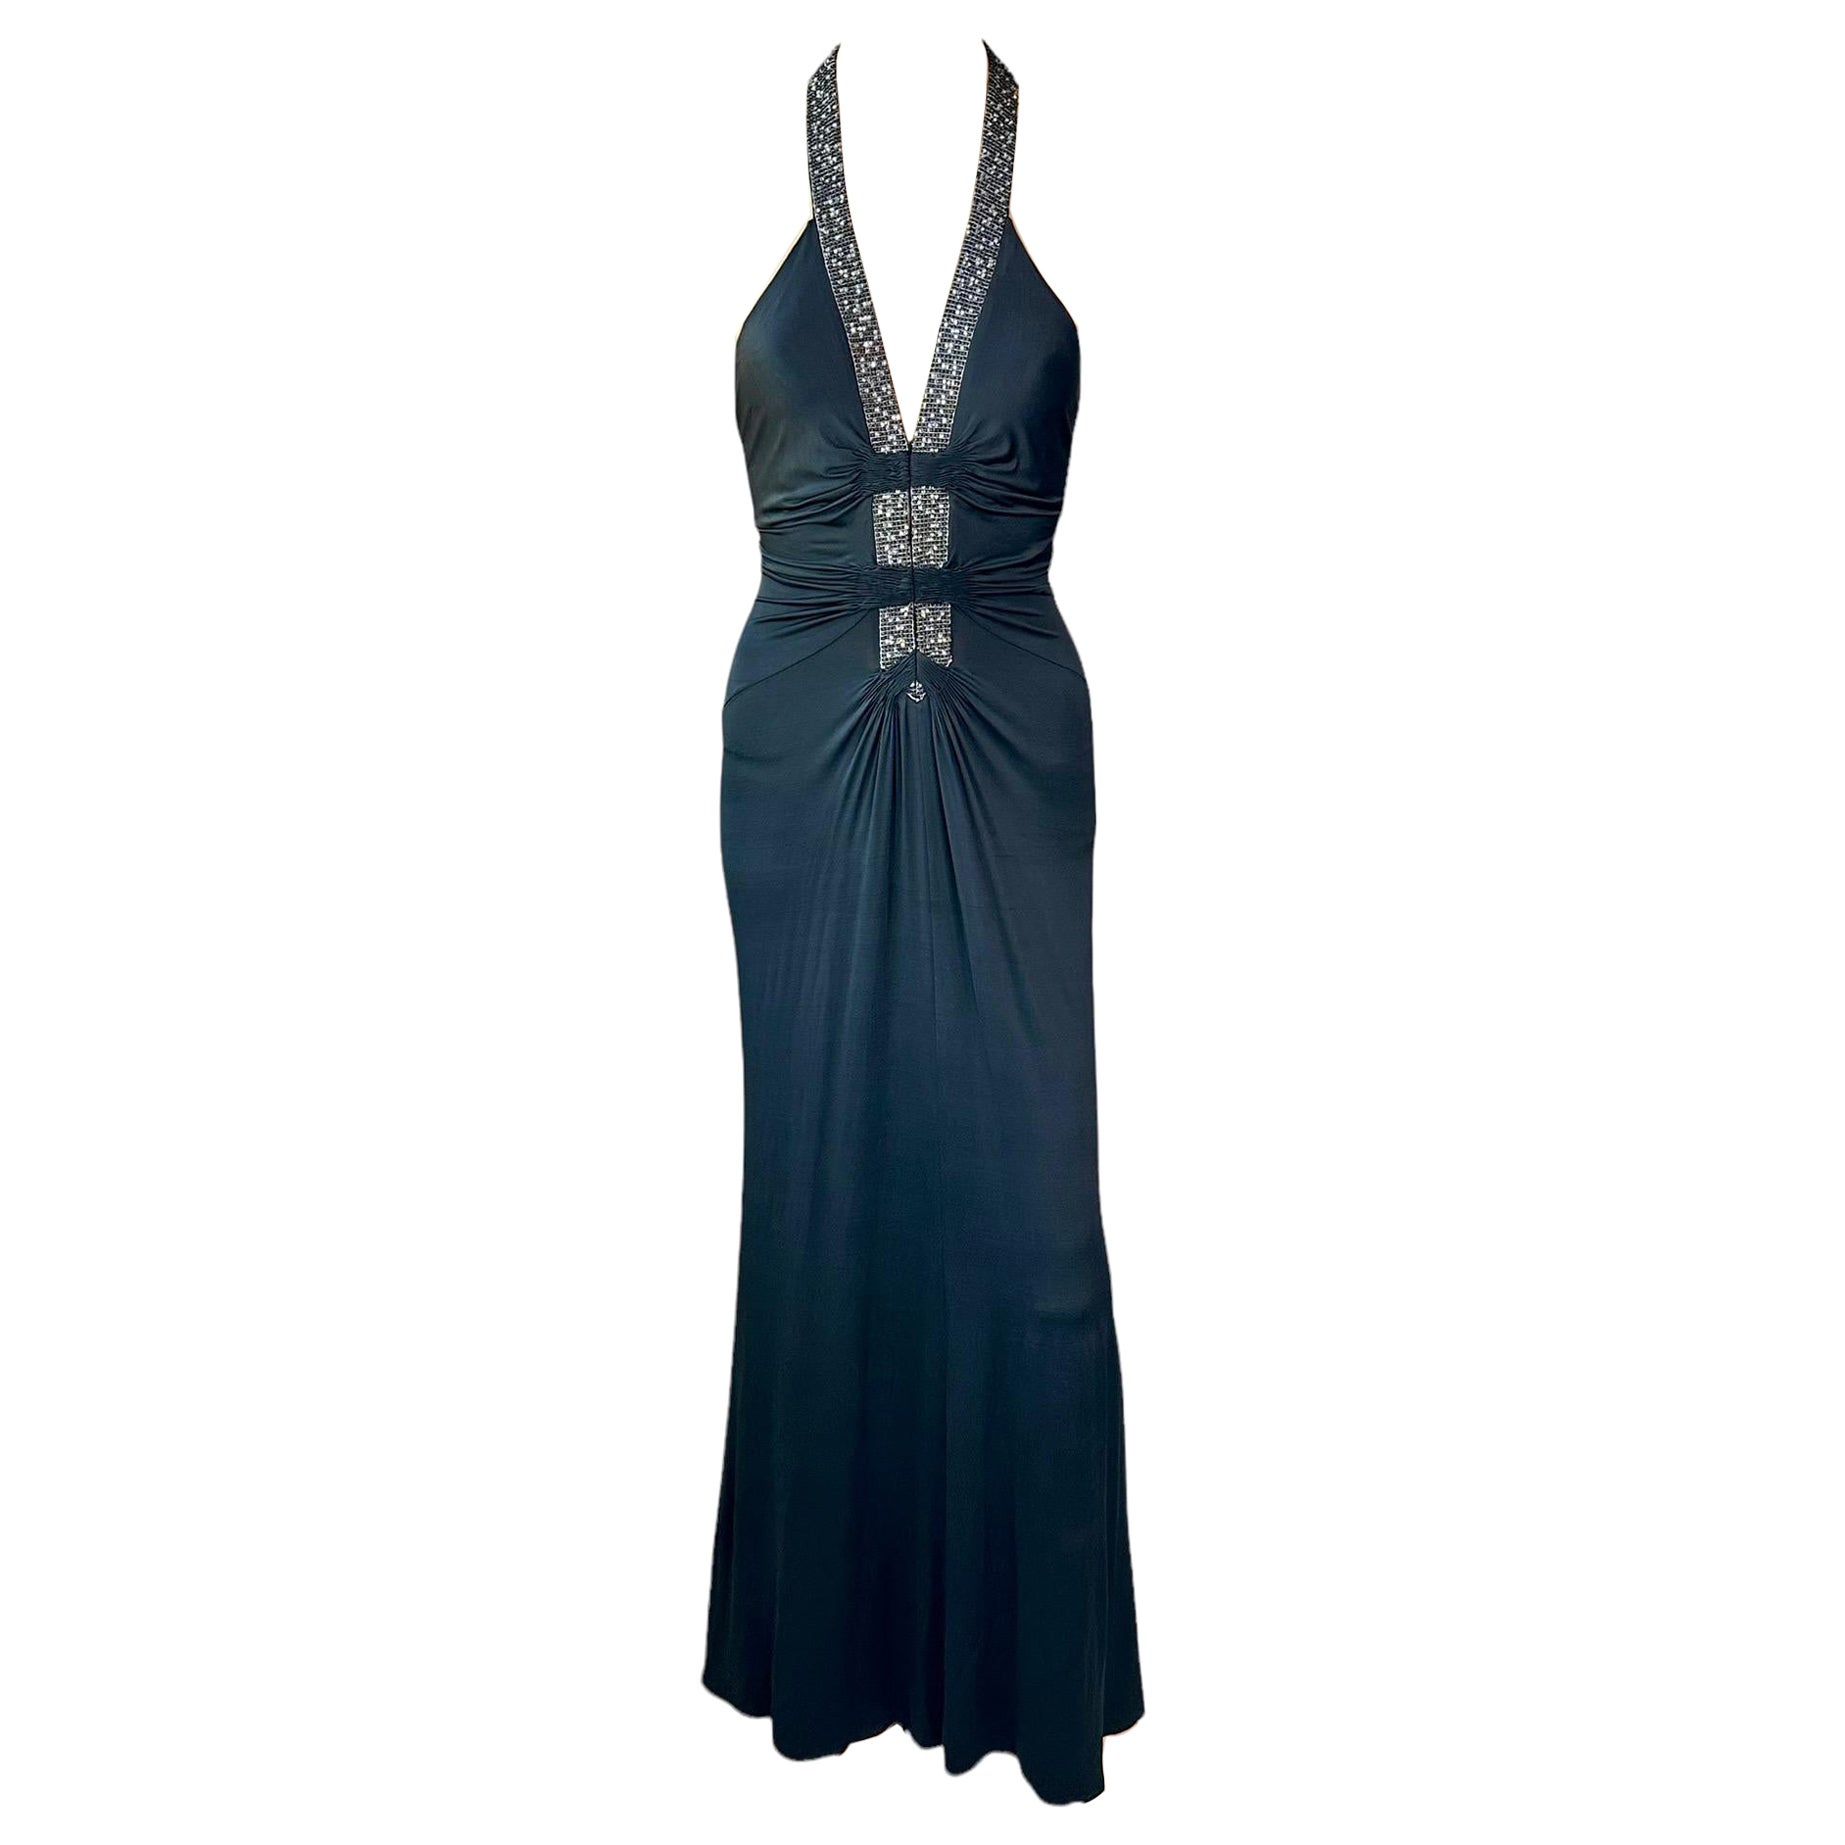 Roberto Cavalli S/S 2005 Embellished Plunging Neckline Black Maxi Evening Dress For Sale